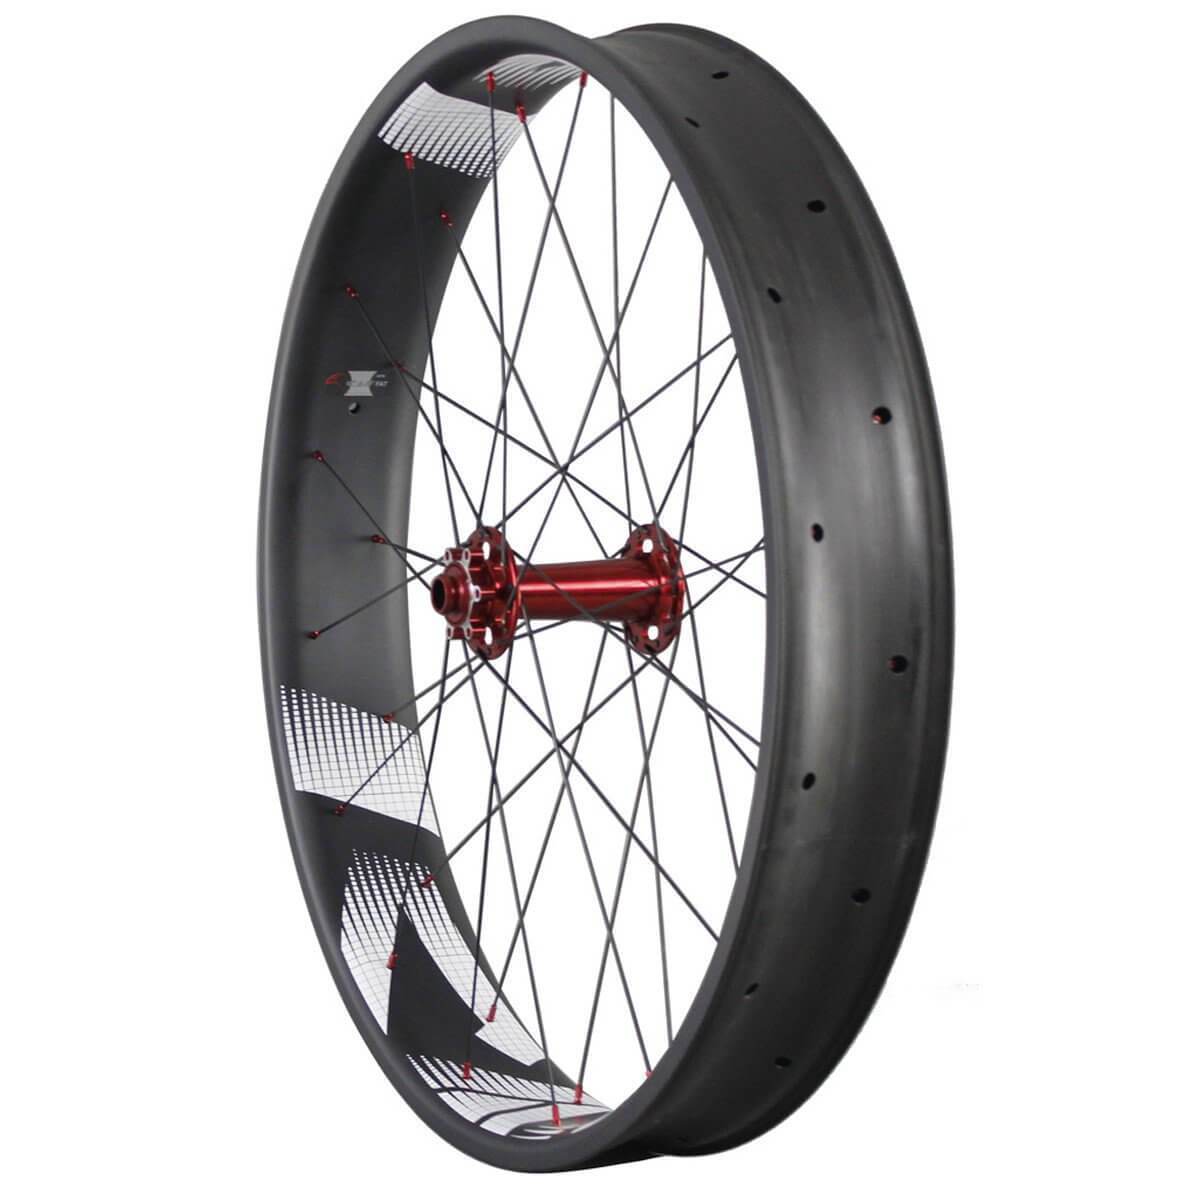 Wheels & Wheelsets - 26er Carbon 90mm Fat Bike Wheelset 90C